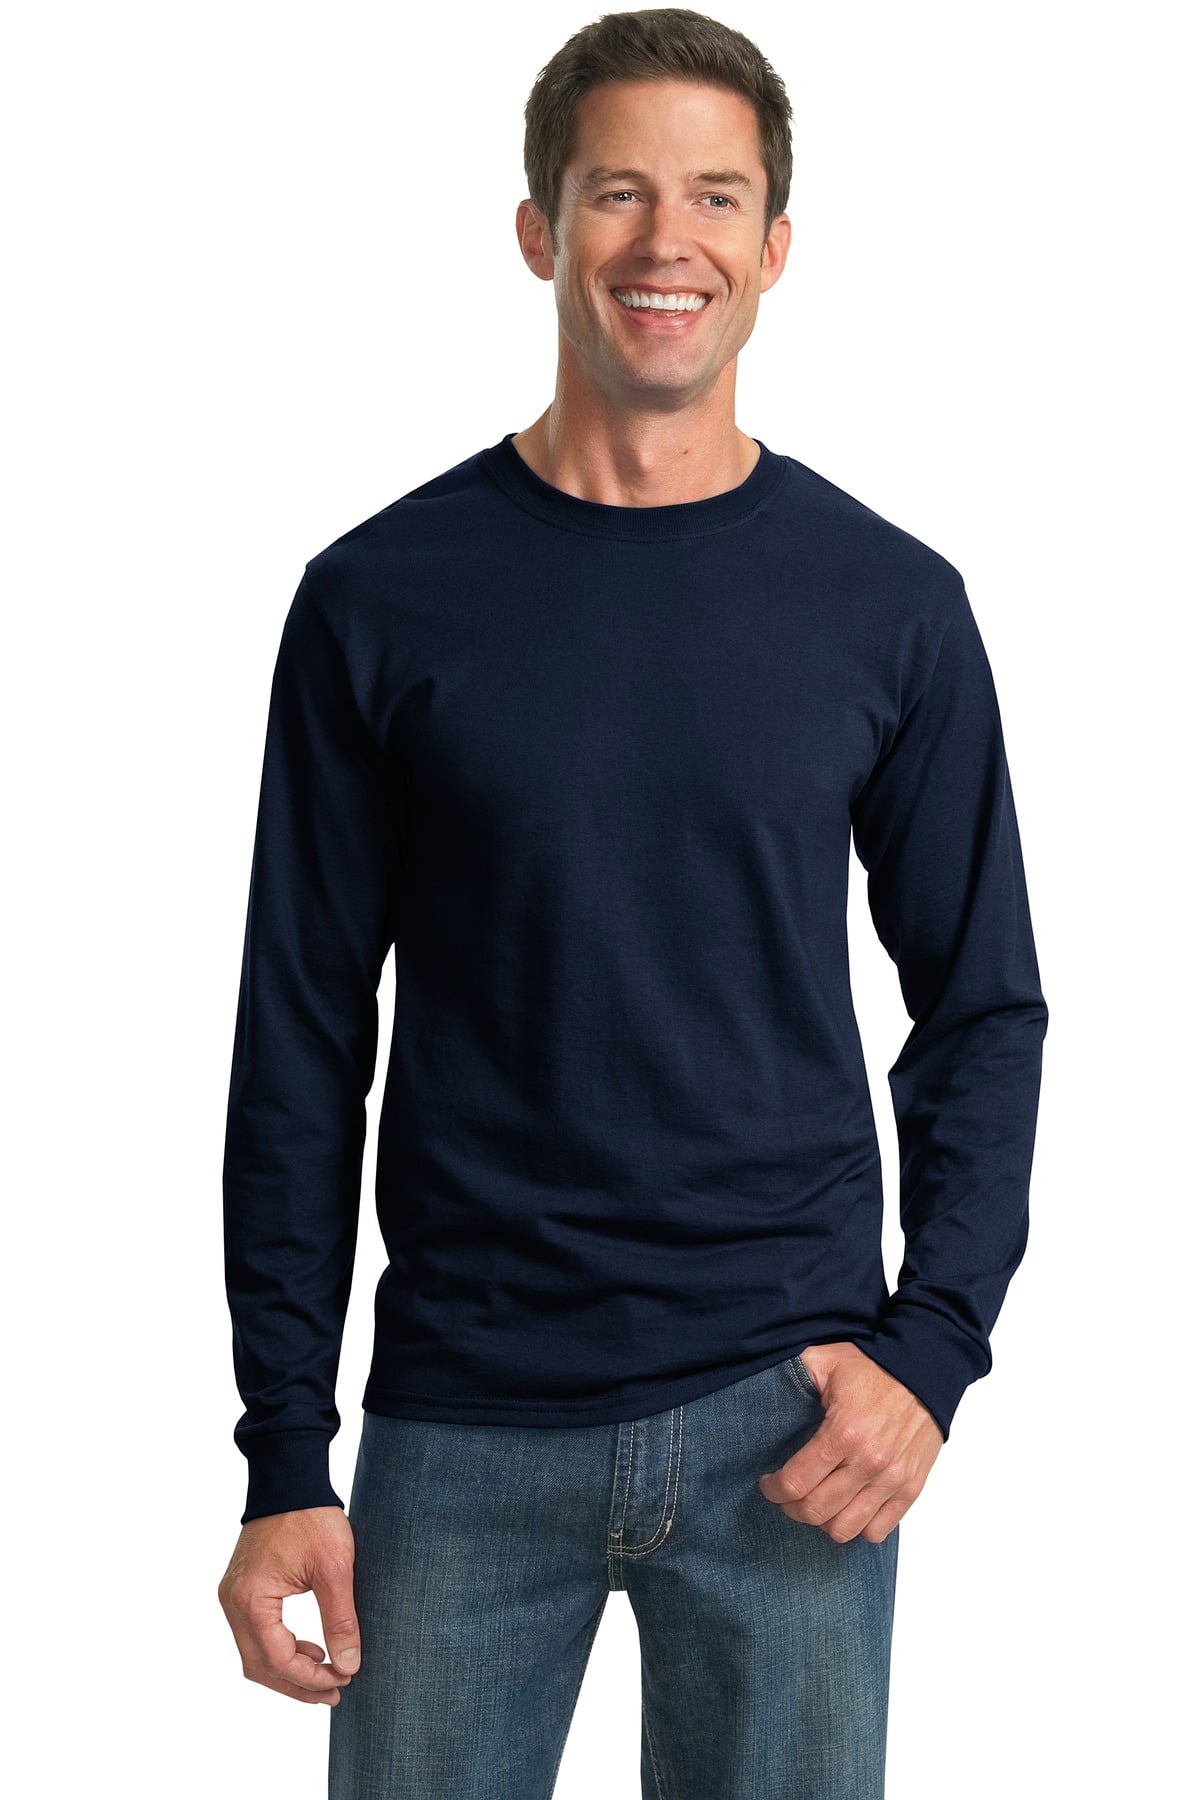 Heavyweight Blend 50/50 Cotton/Poly Adult Long-Sleeve T-Shirt Jerzees Adult 5.6 oz